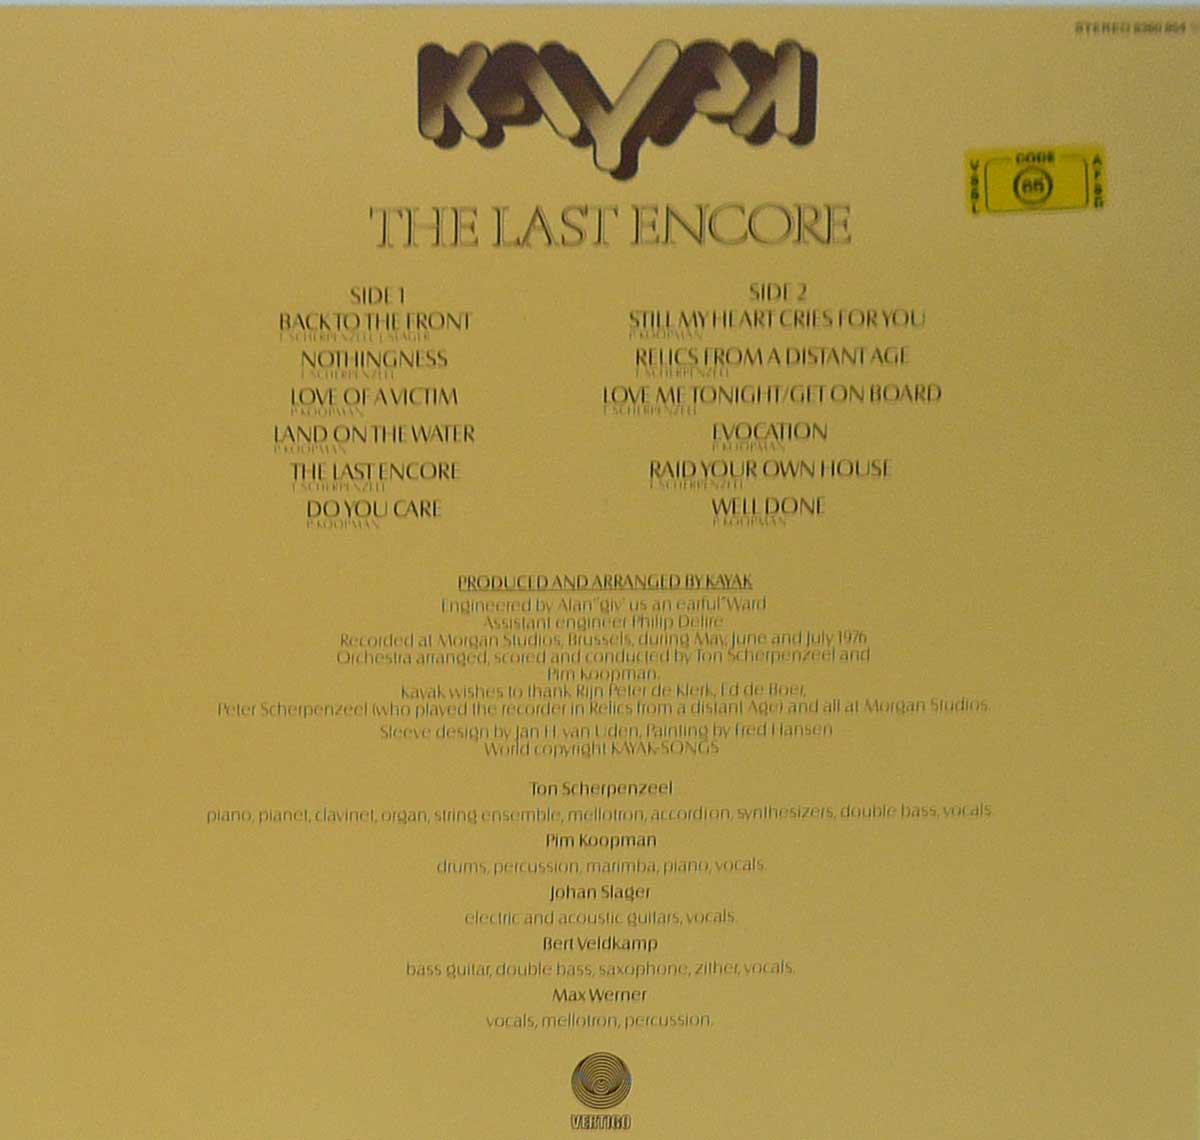 Photo of "The Last Encore" Album's Back Cover   